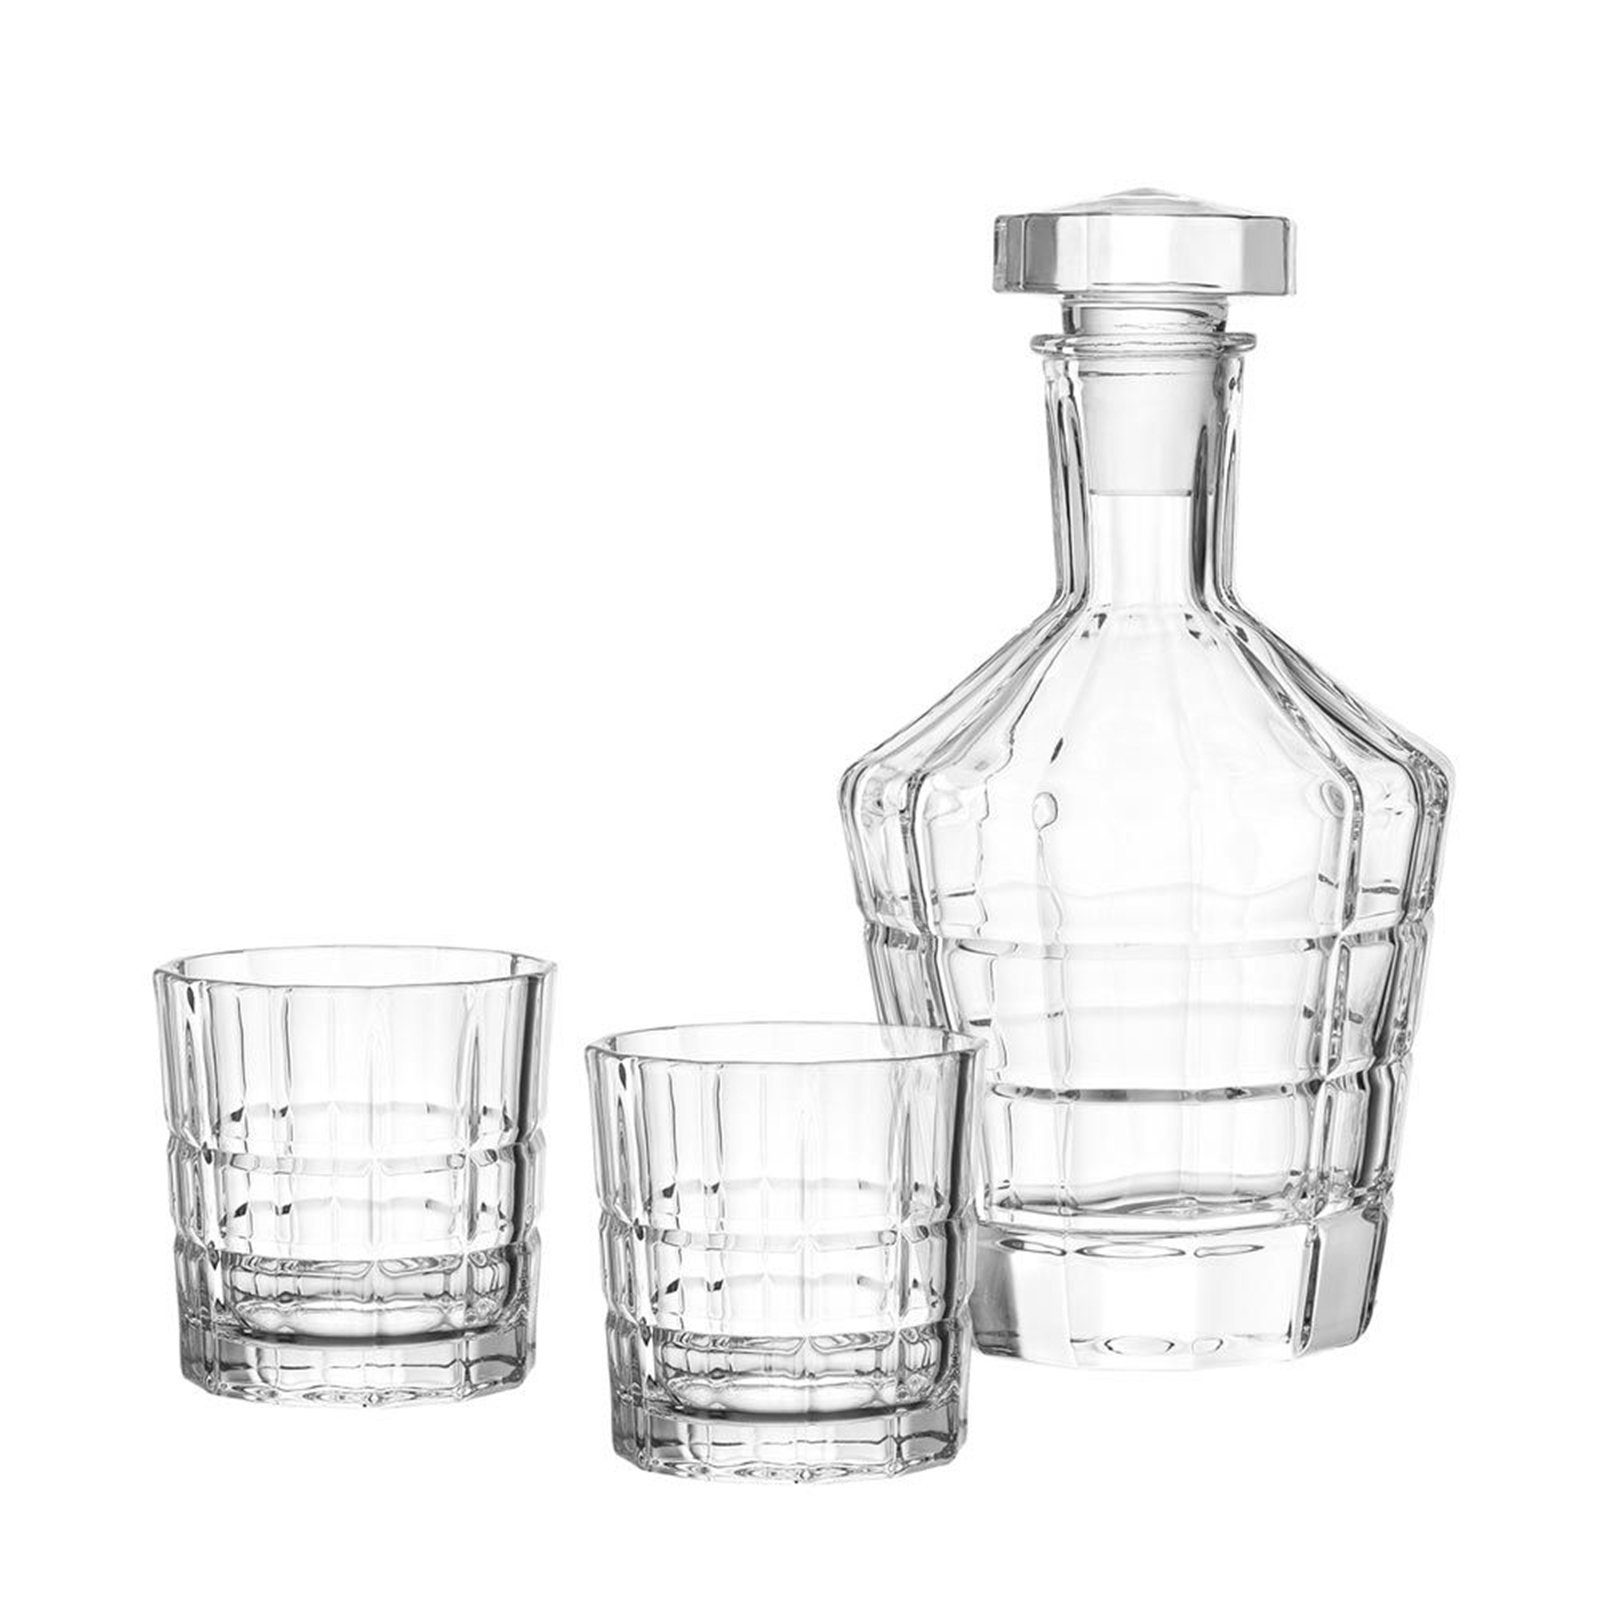 LEONARDO Whiskyglas Whiskyset 3-teilig DOF Spiritii, Glas